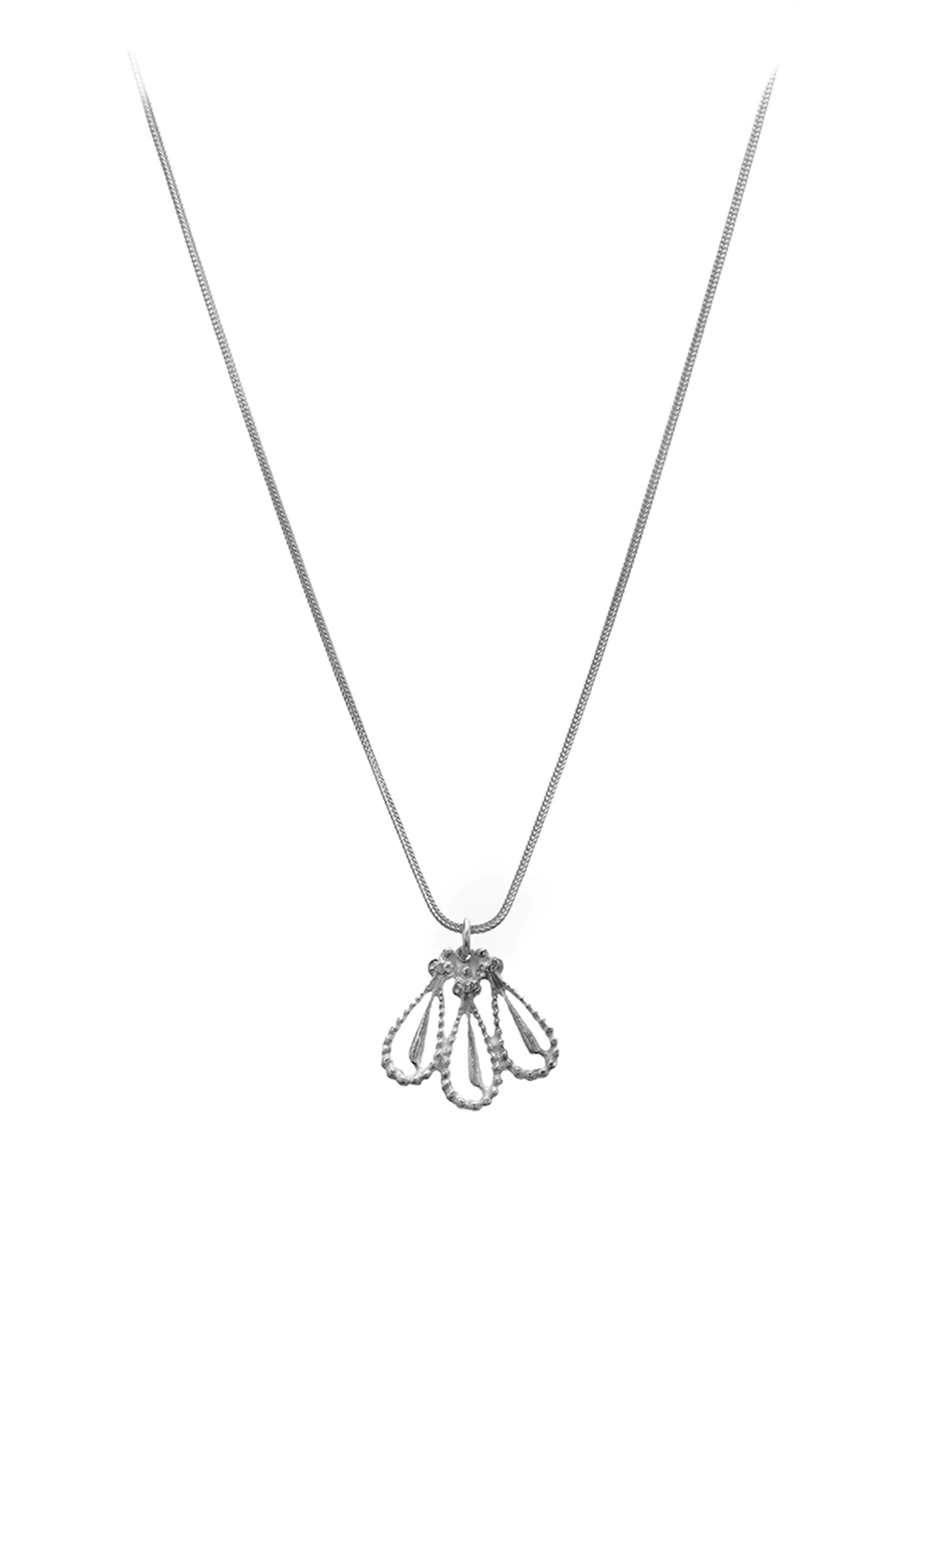 necklace with medium pendant